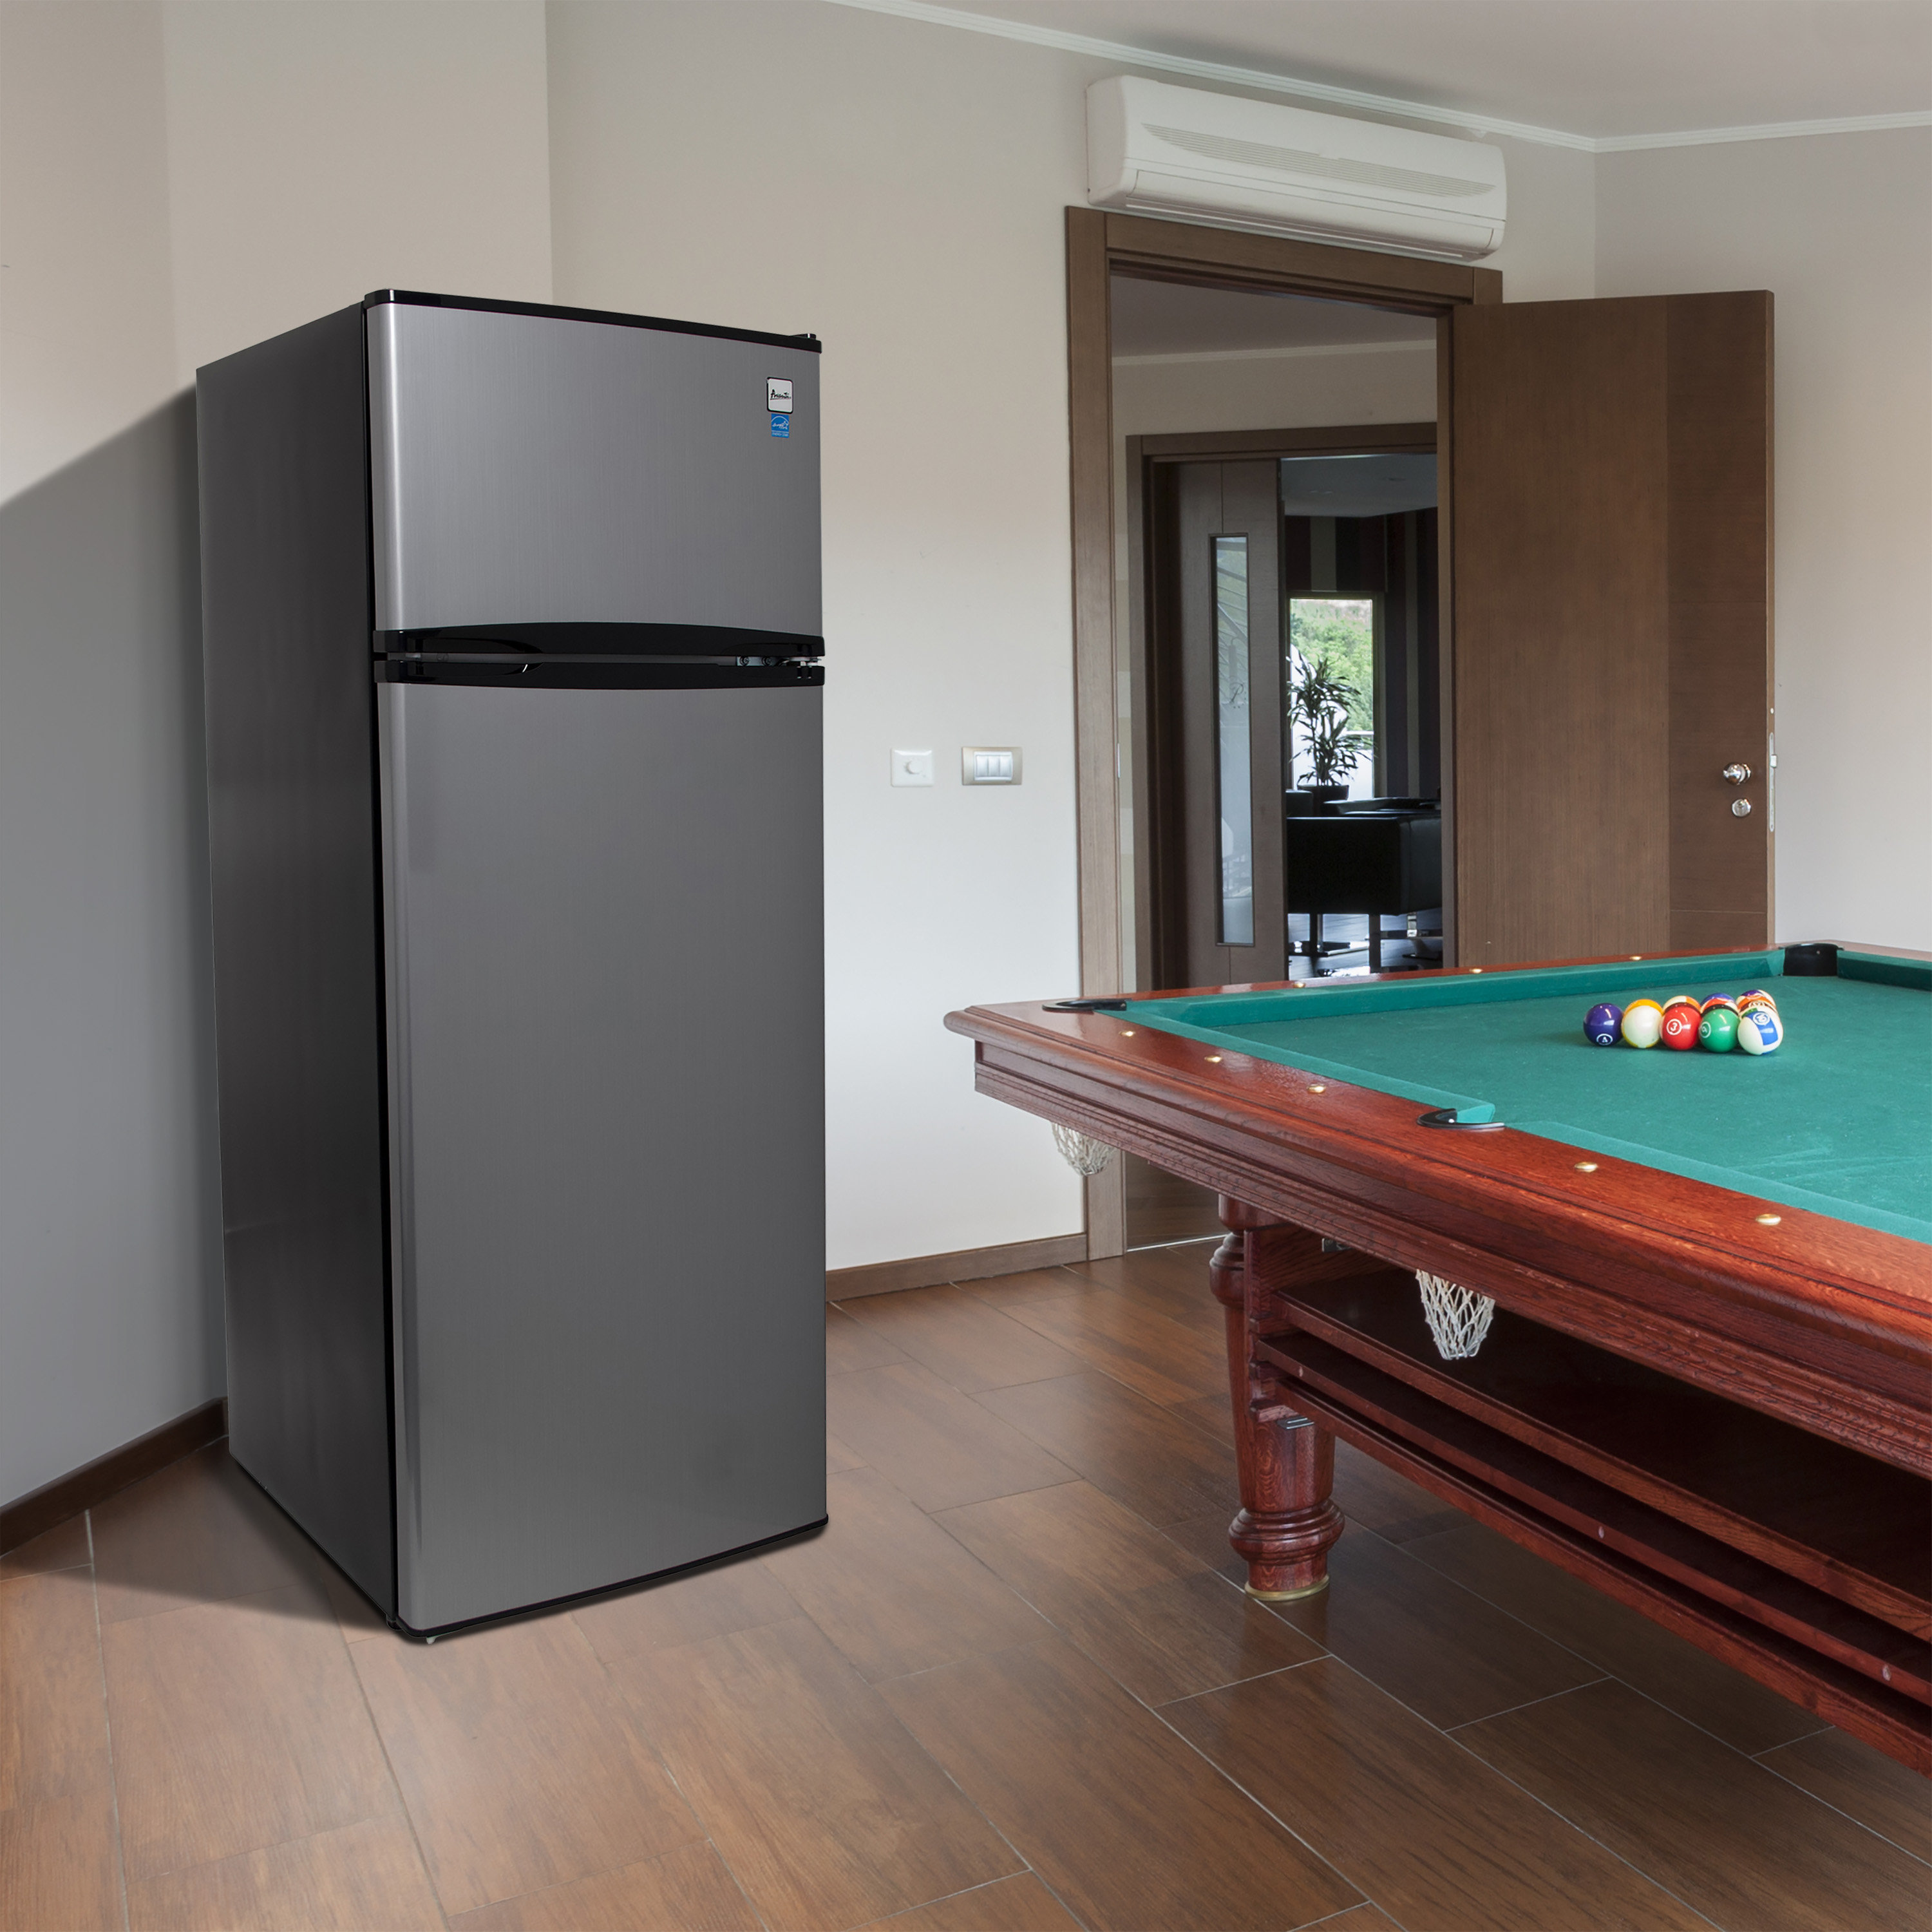 RA7306WT by Avanti - 7.4 cu. ft. Apartment Size Refrigerator